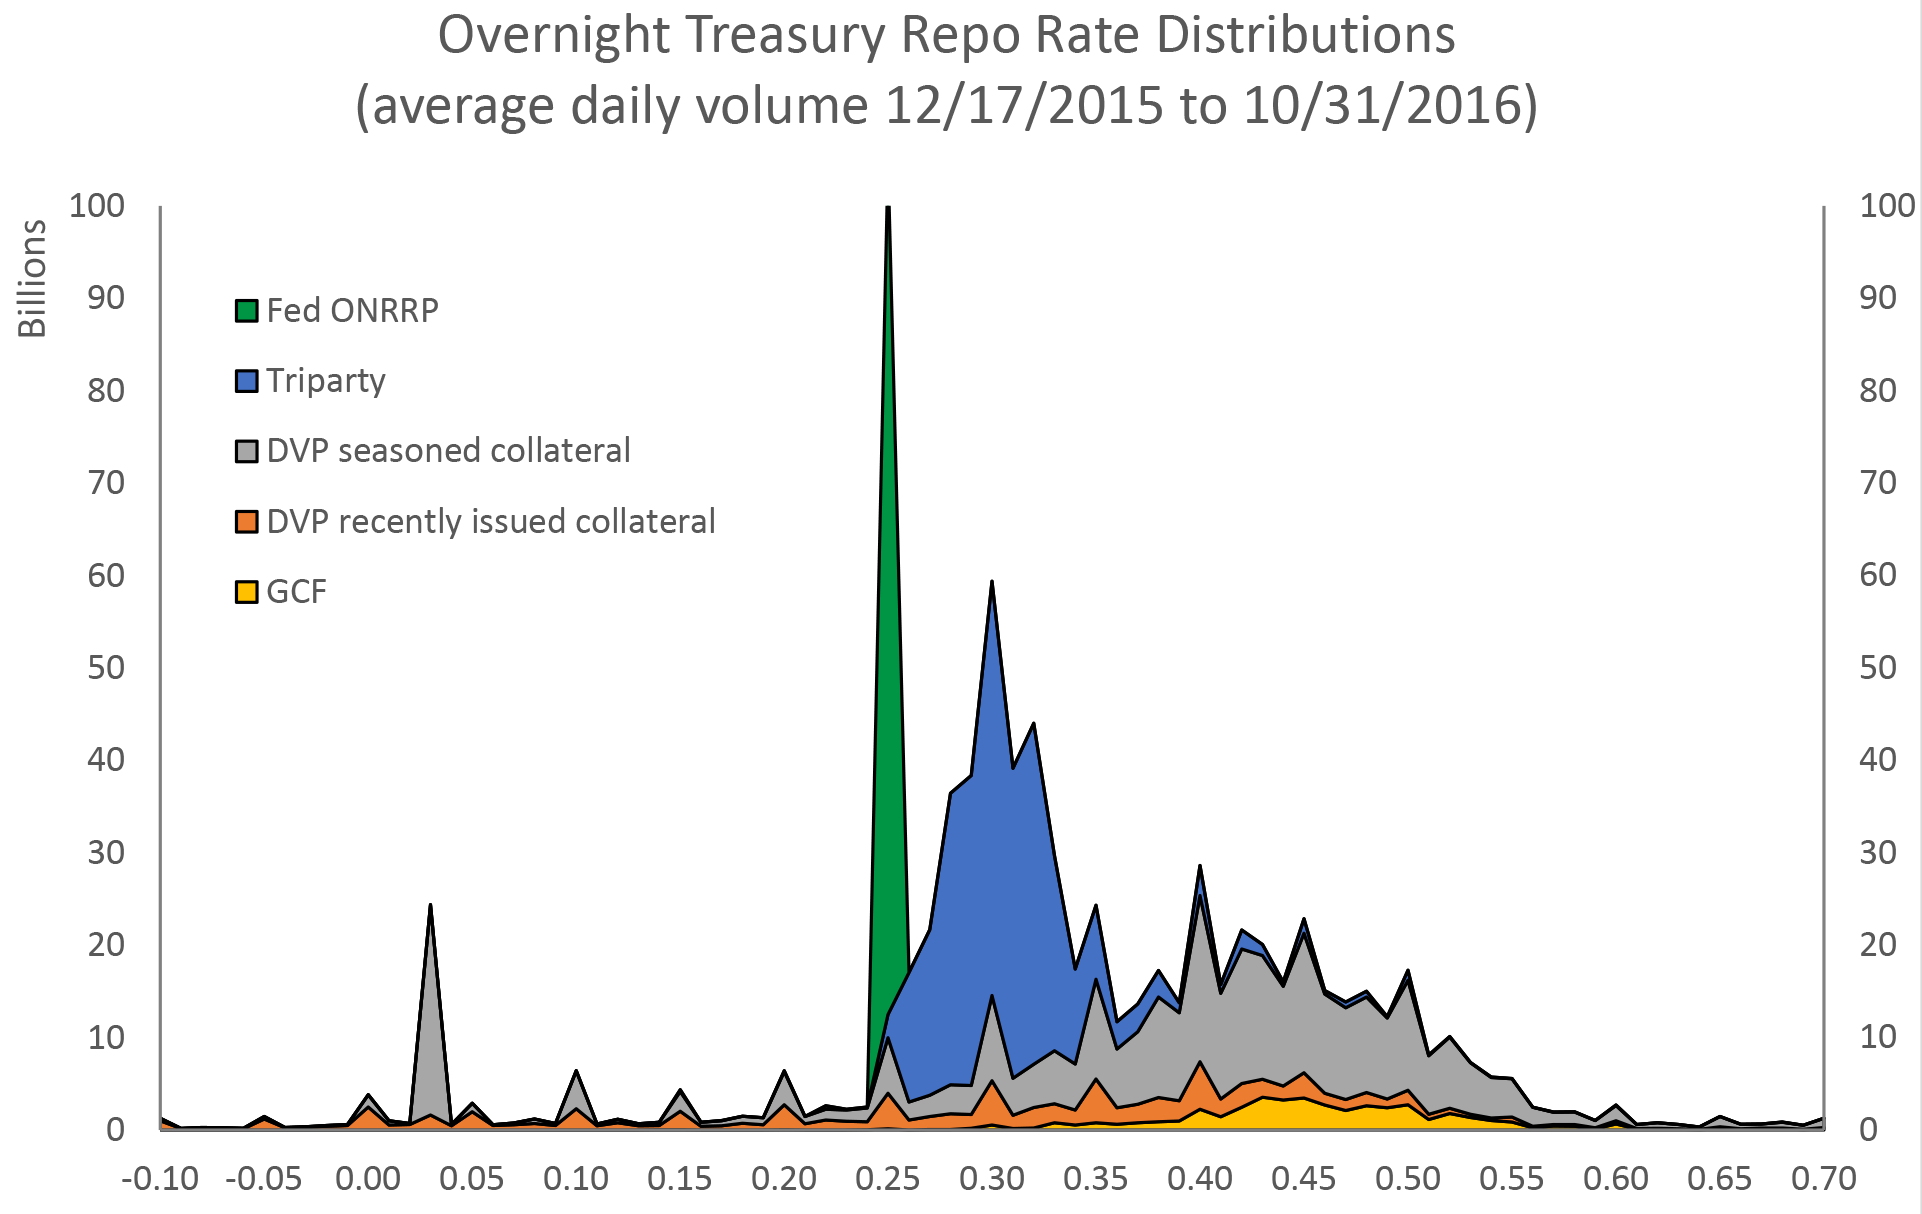 Figure 3: Overnight Treasury Repo Rate Distributions. See accessible link for data description.